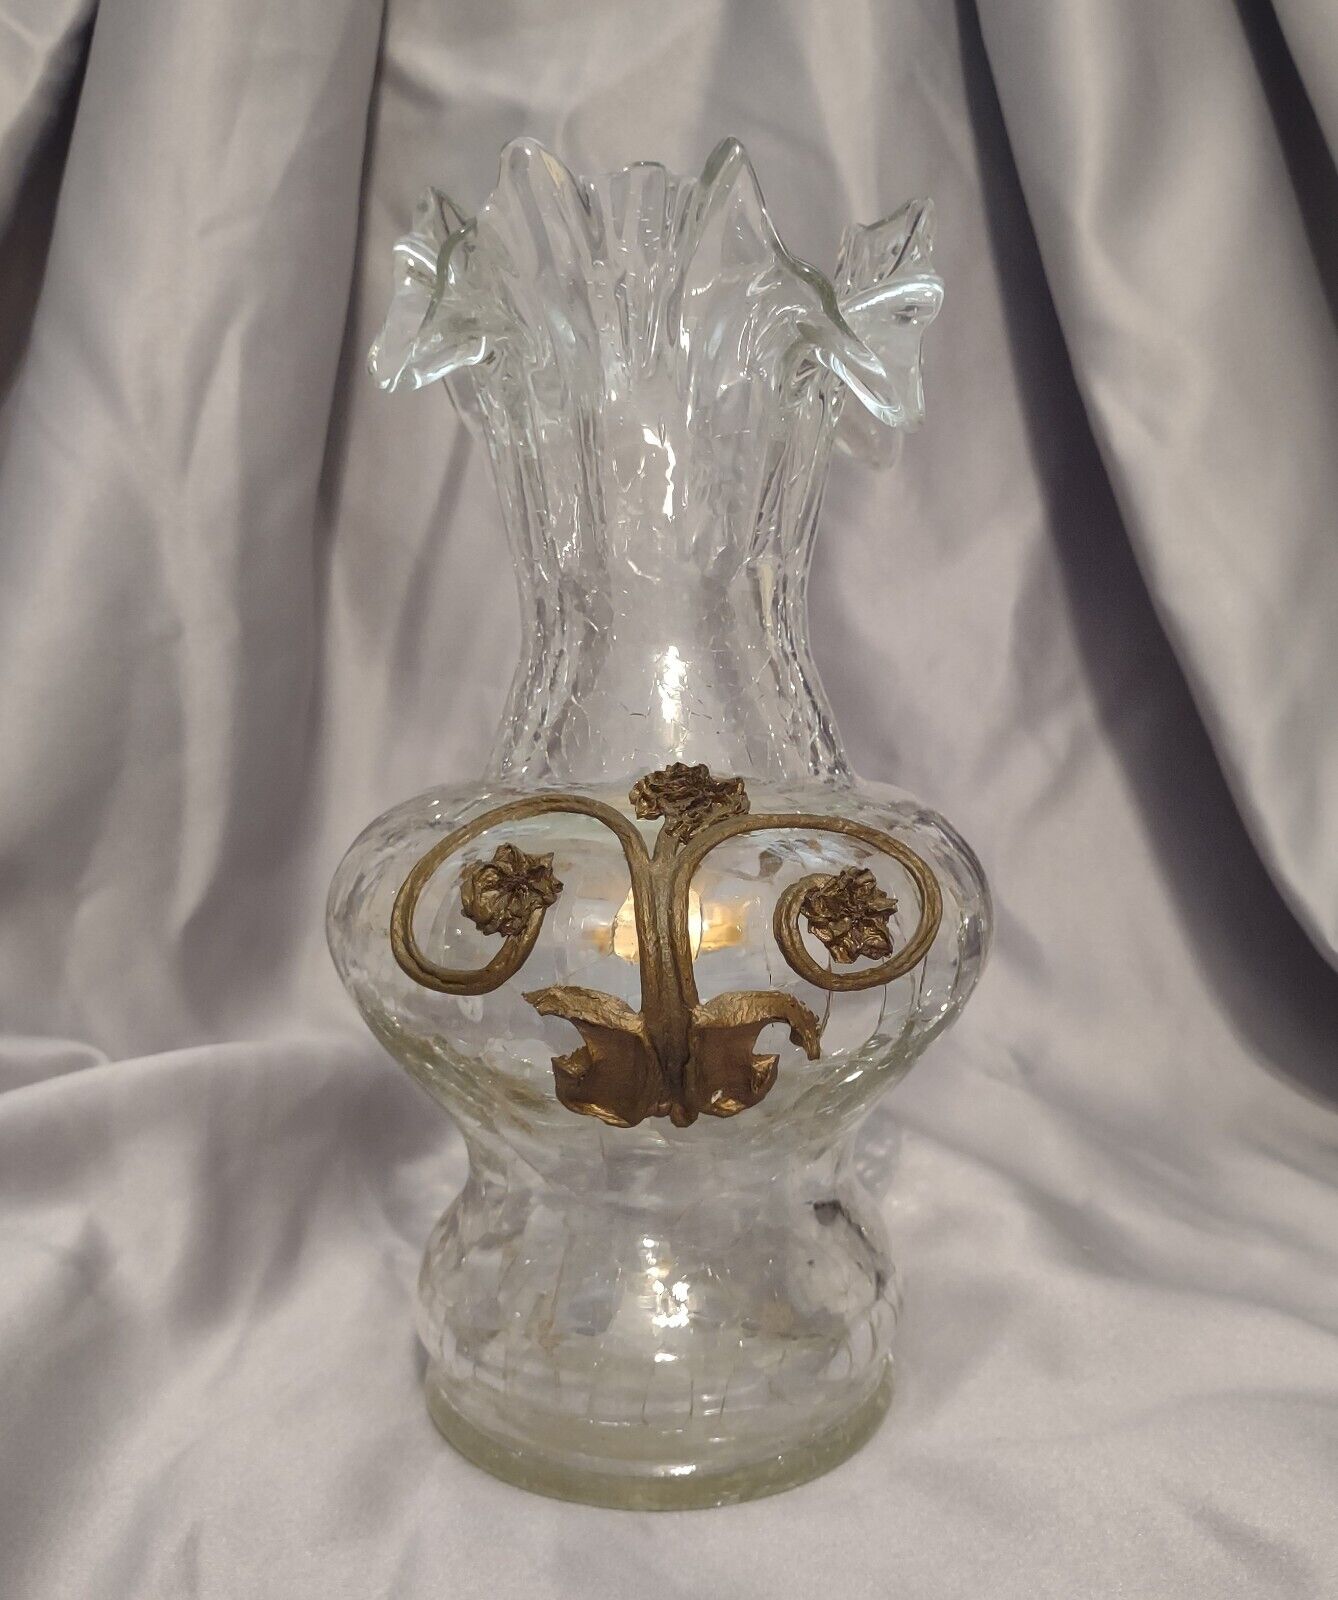 Vintage Crackled Glass Vase w/Ruffled Edges and Metal Appliques Designs